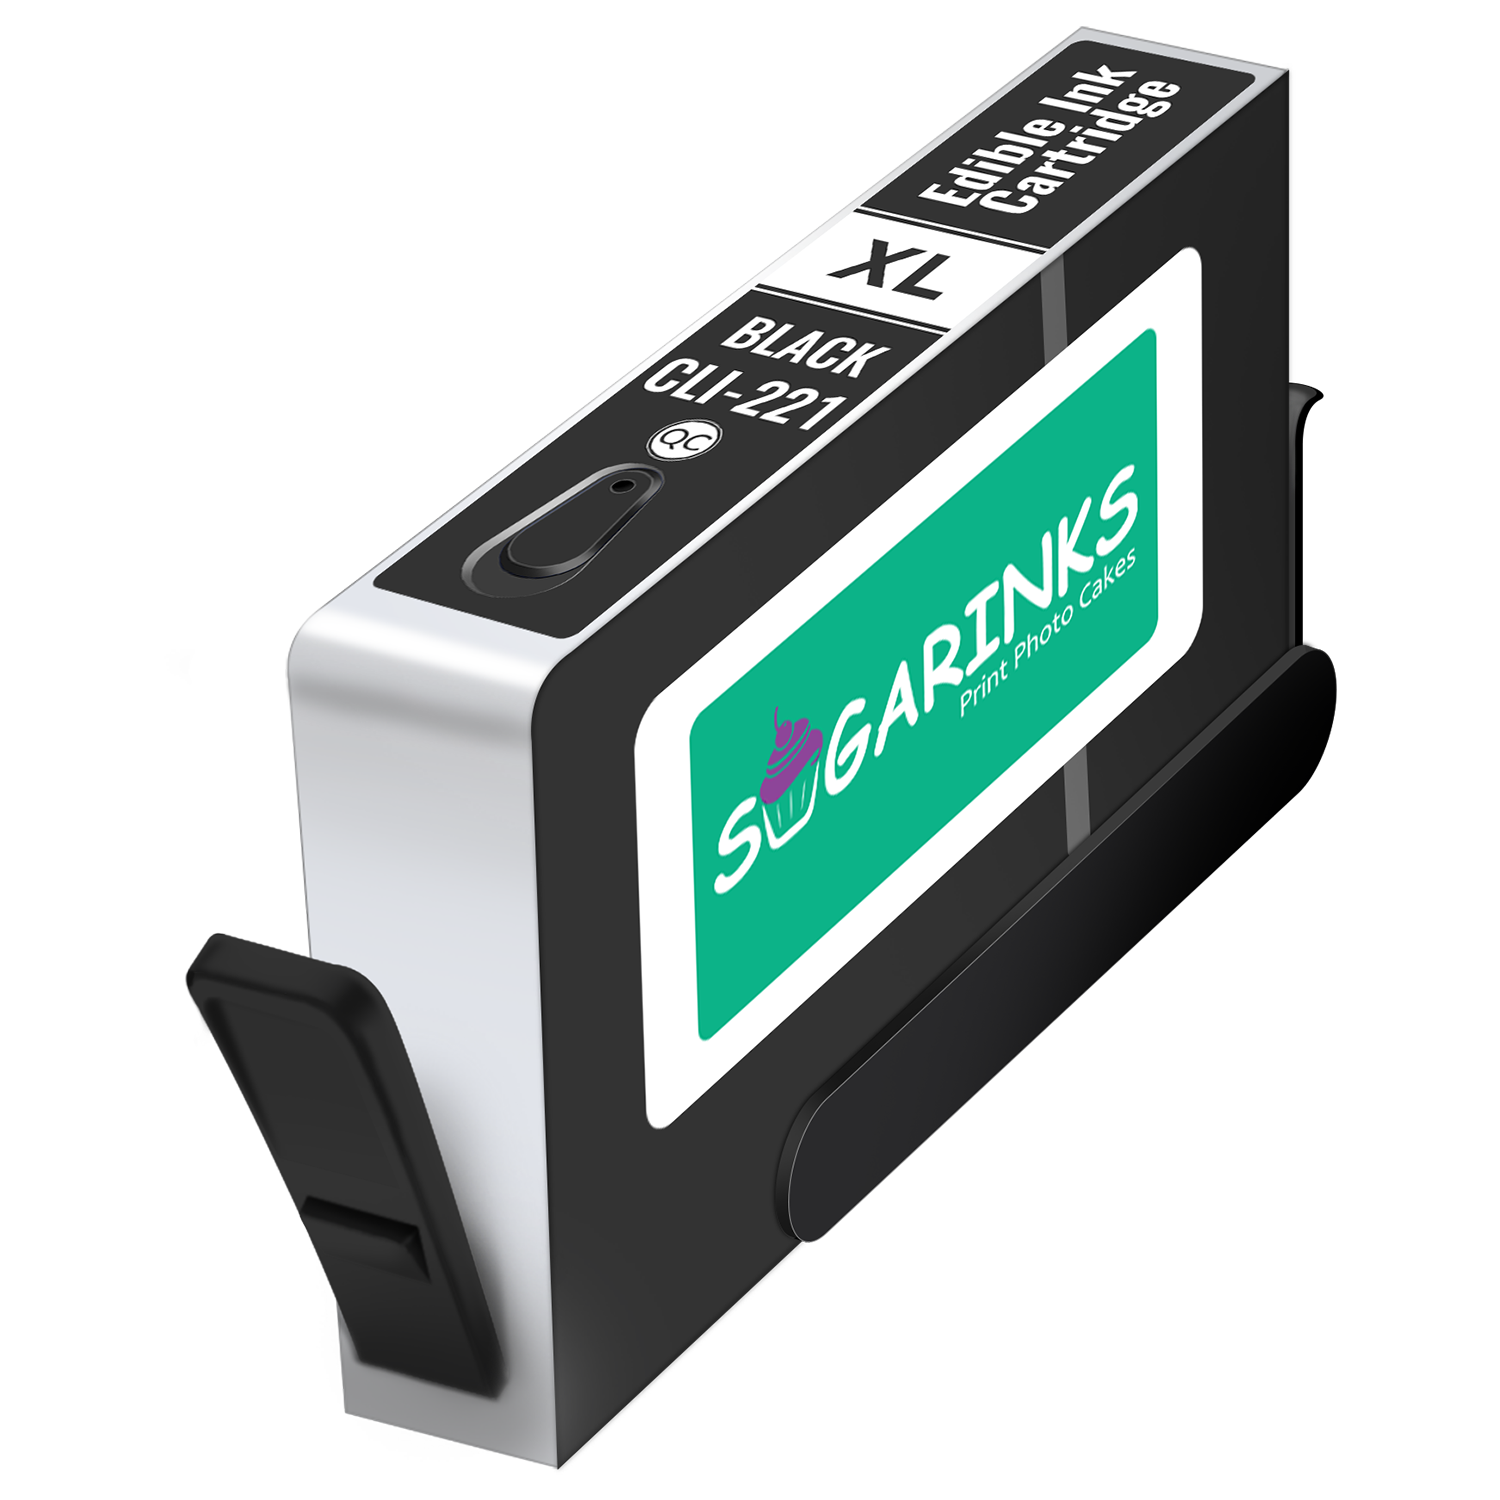 Sugarinks Edible Ink Cartridge CLI-221BK for Canon Edible Printers – Black